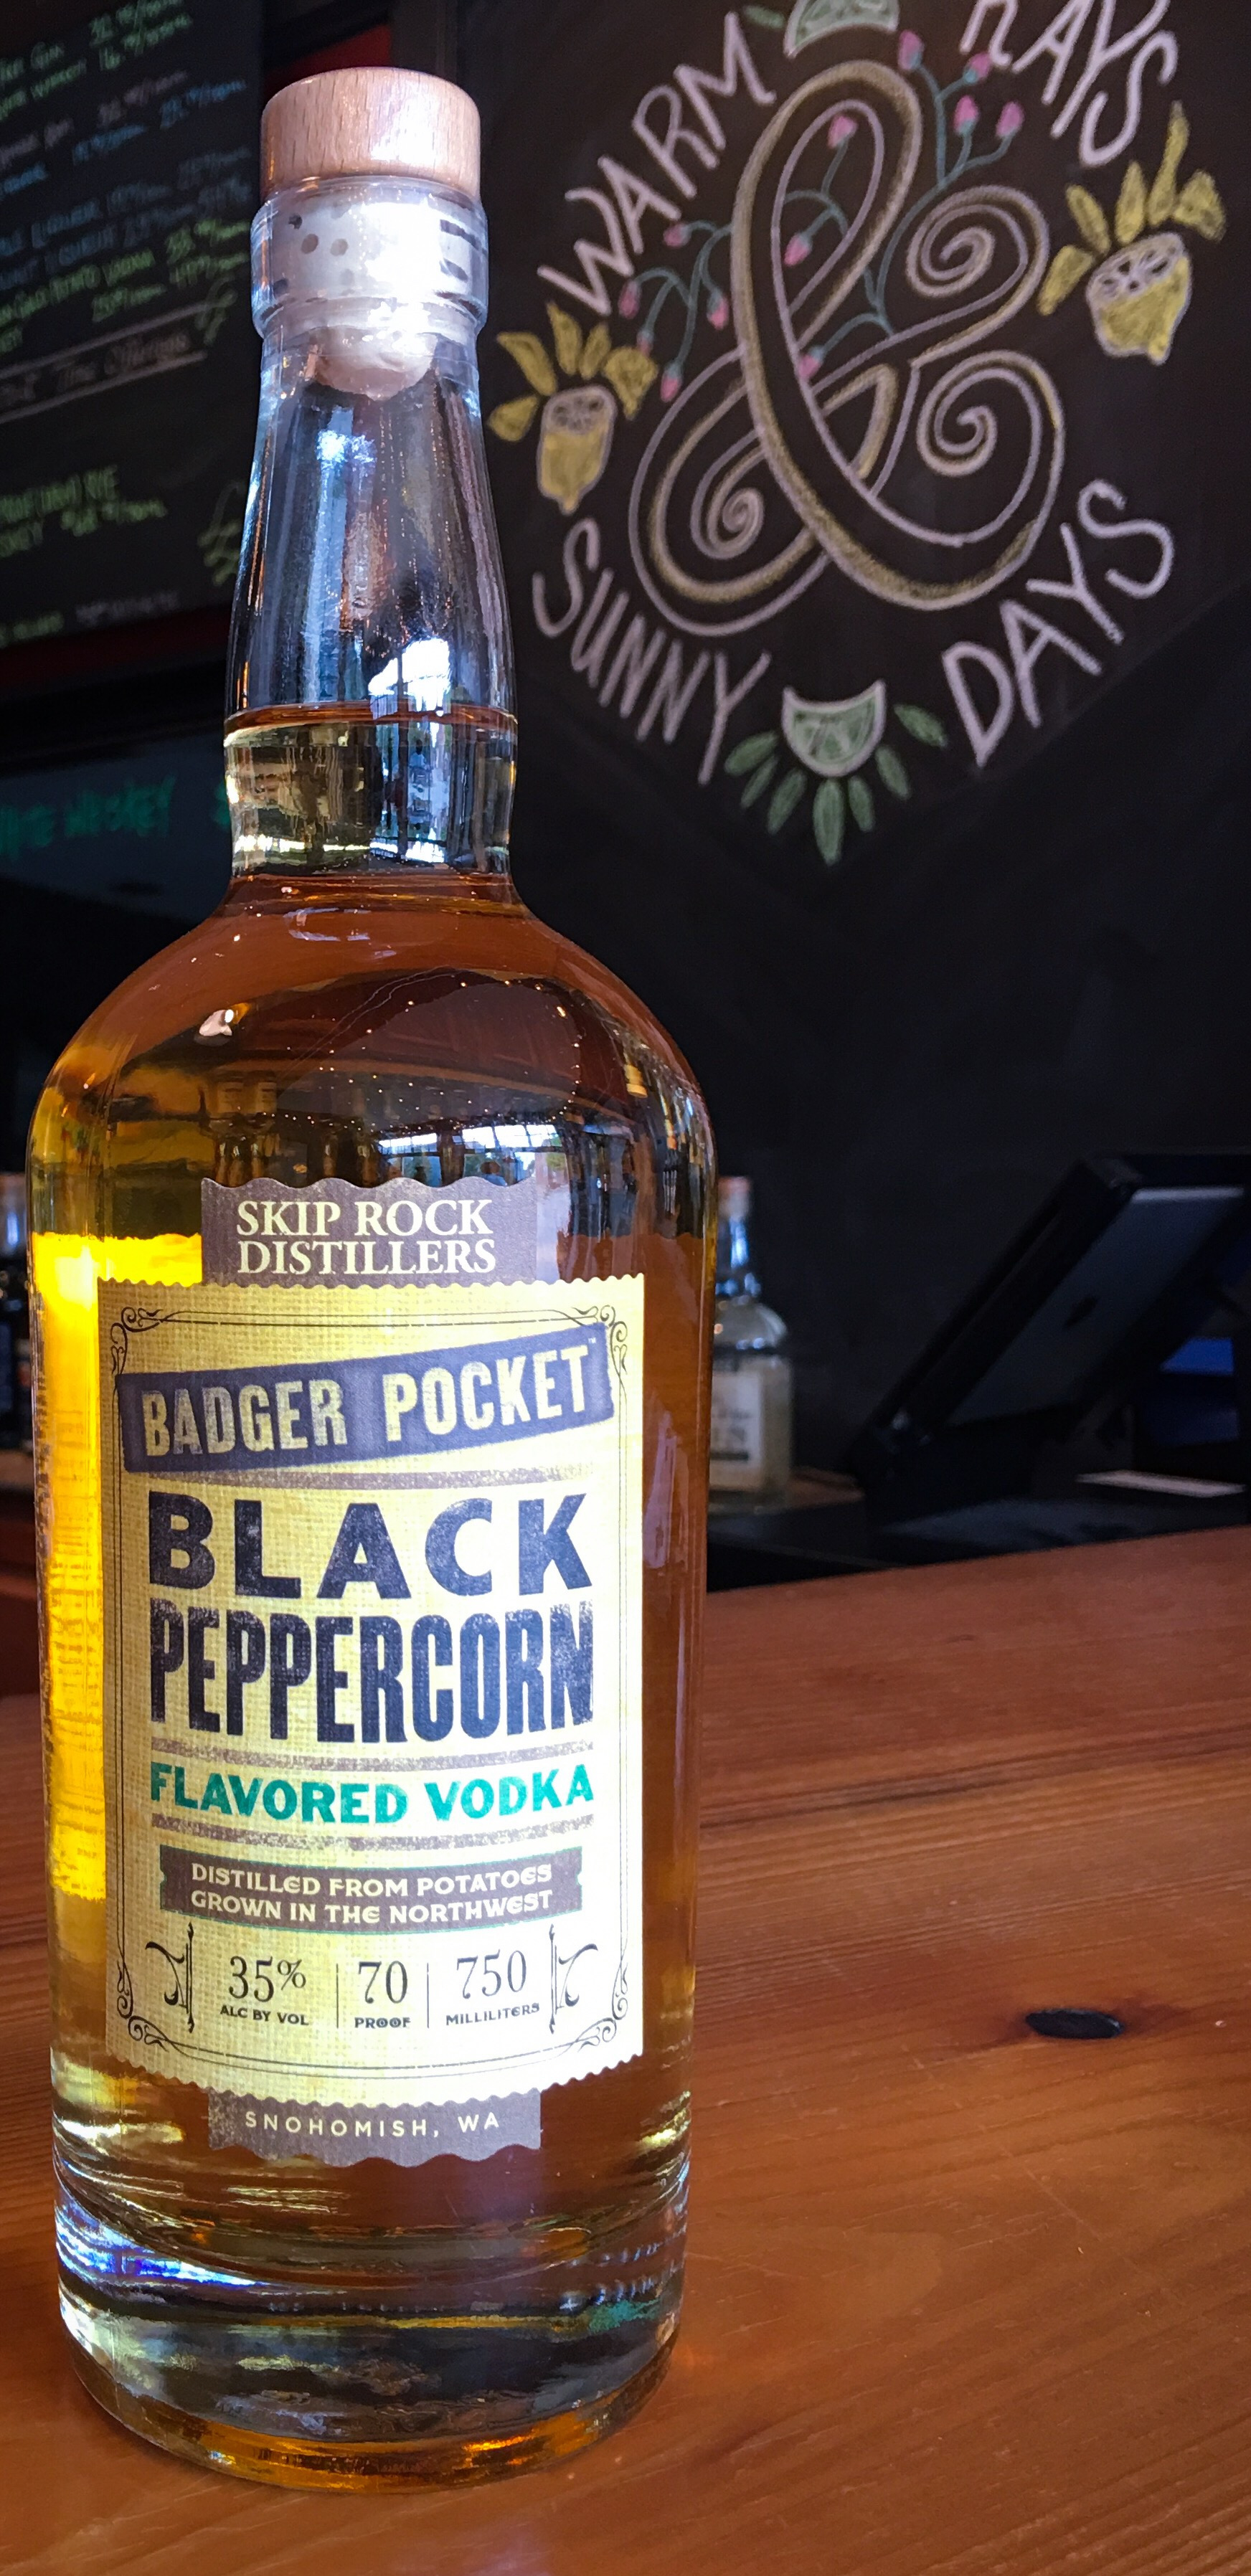 Badger Pocket Black Peppercorn Vodka